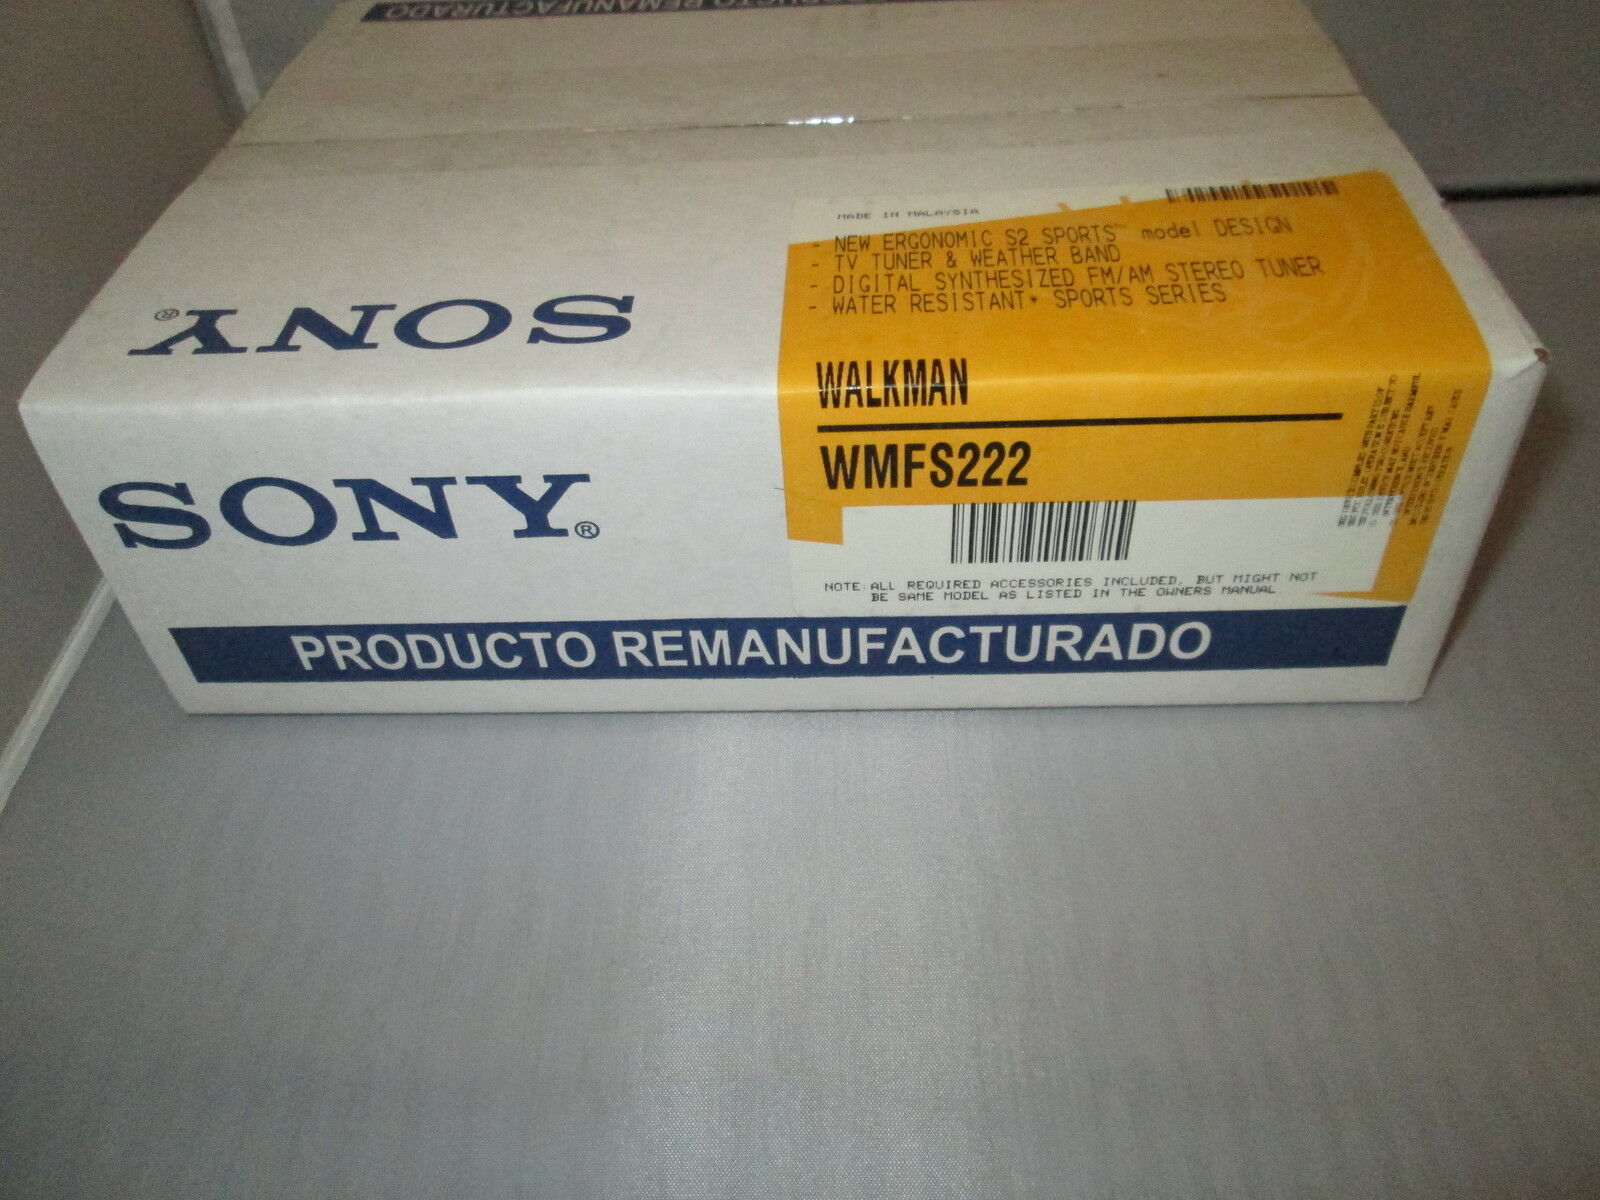 Sony Walkman Wm-fs222 Refurbished Cassette Player Fm/am/weather/radio Wmfs222